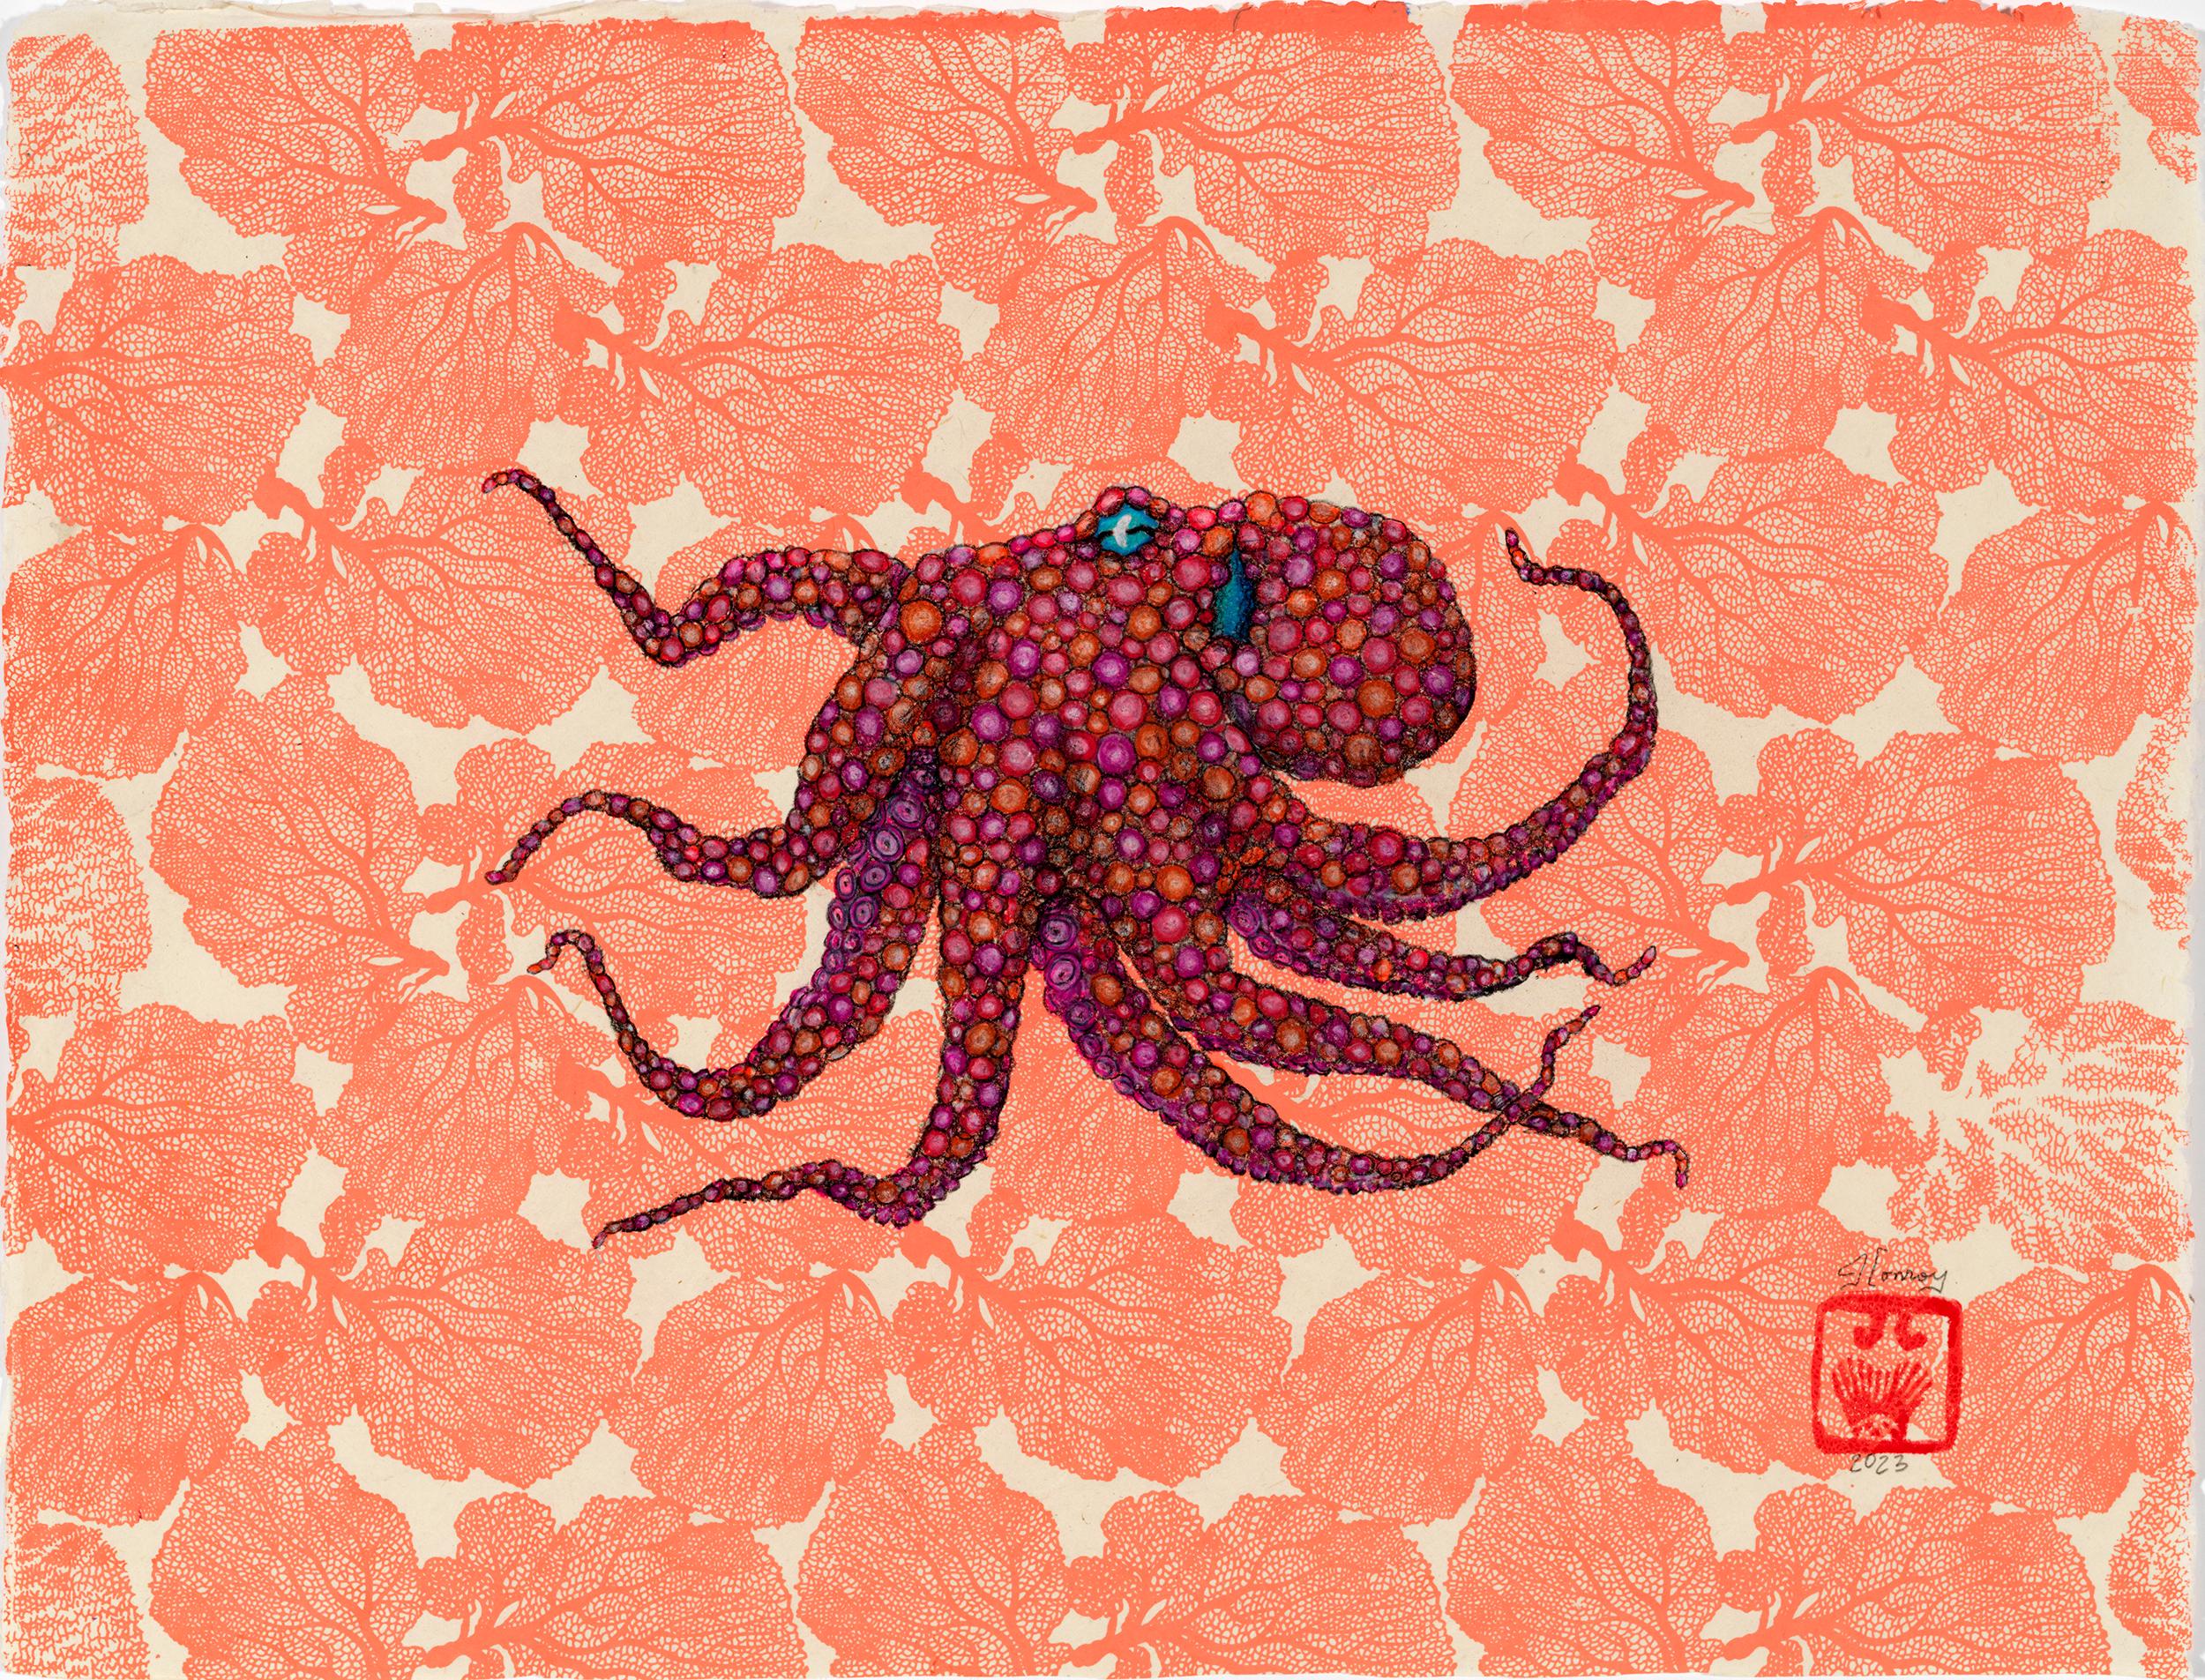 Jeff Conroy Animal Art - Rubbarb - Gyotaku Style Sumi Ink Painting of an Octopus 